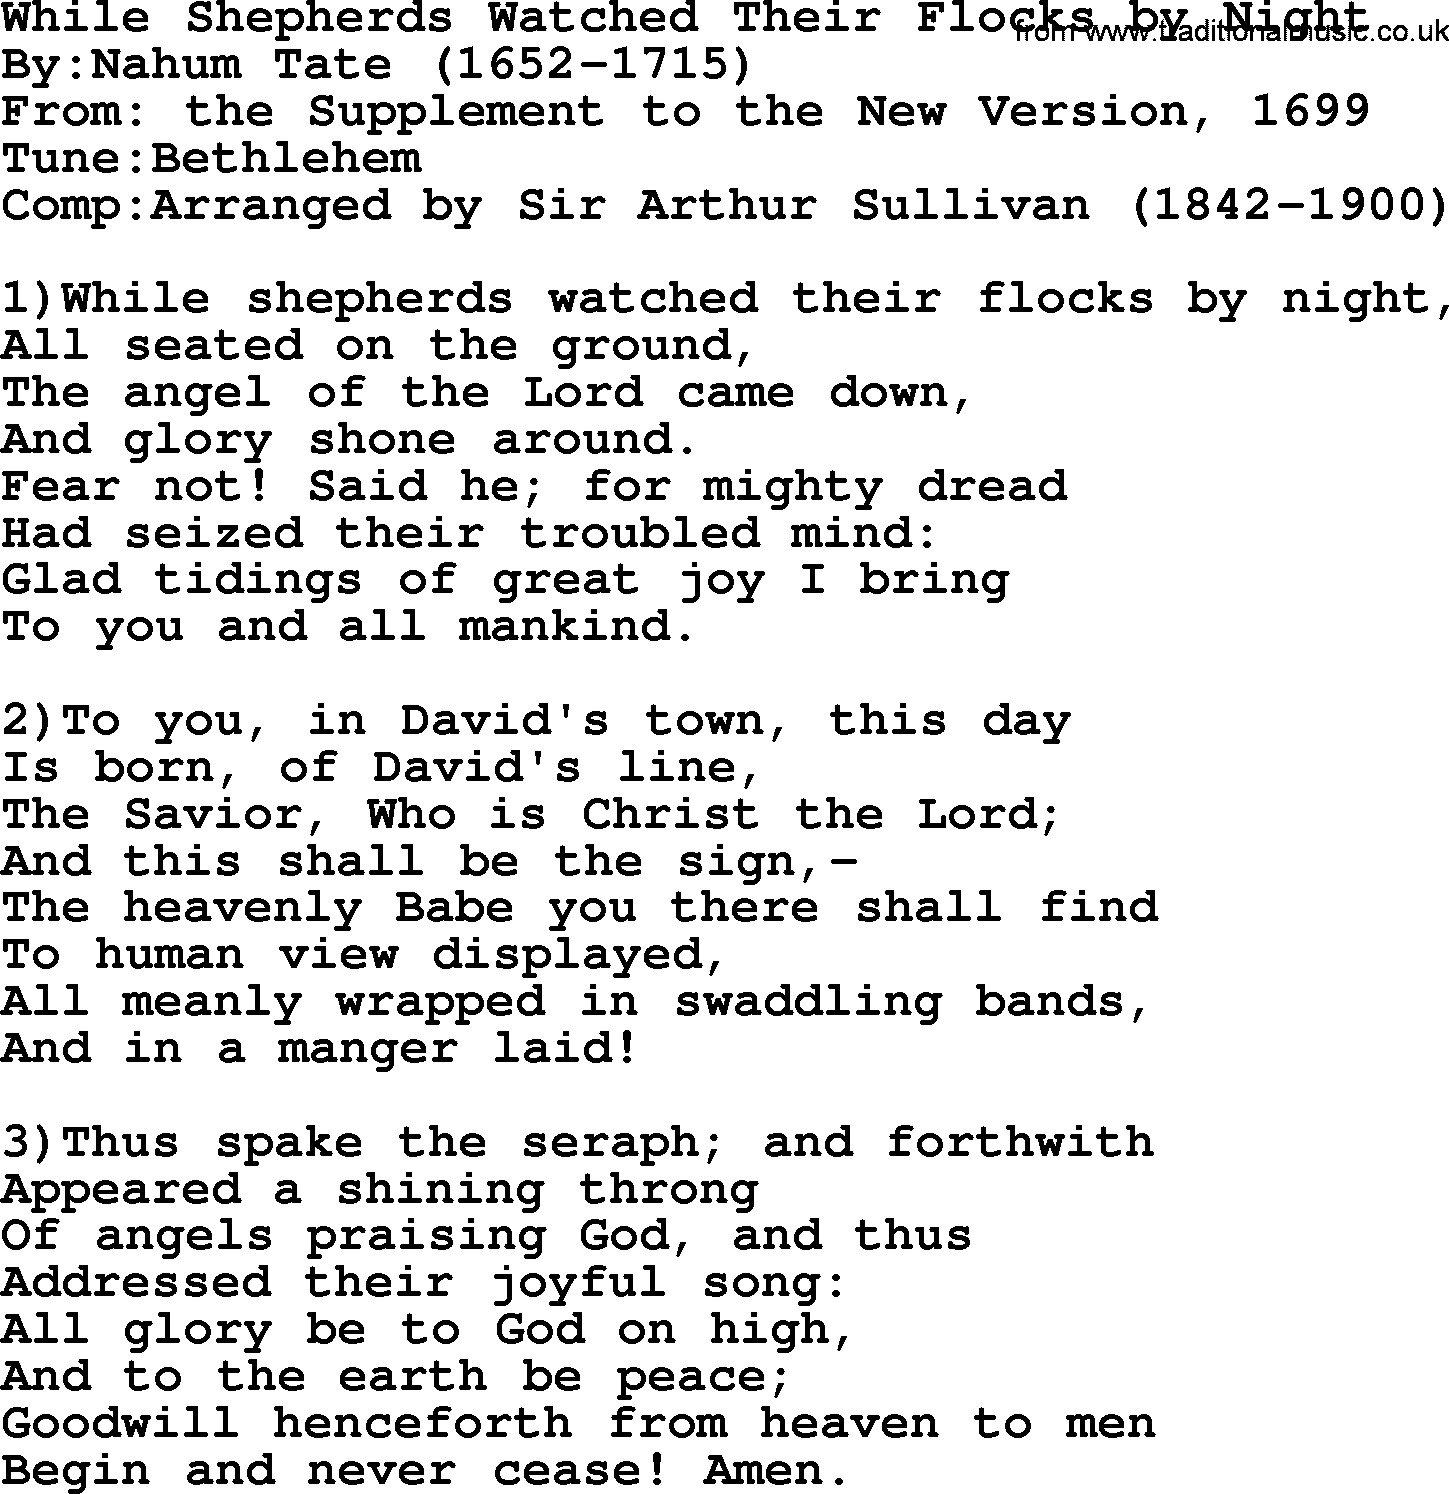 Lyrics To The Song While Shepherds Watched Their Flocks - LyricsWalls